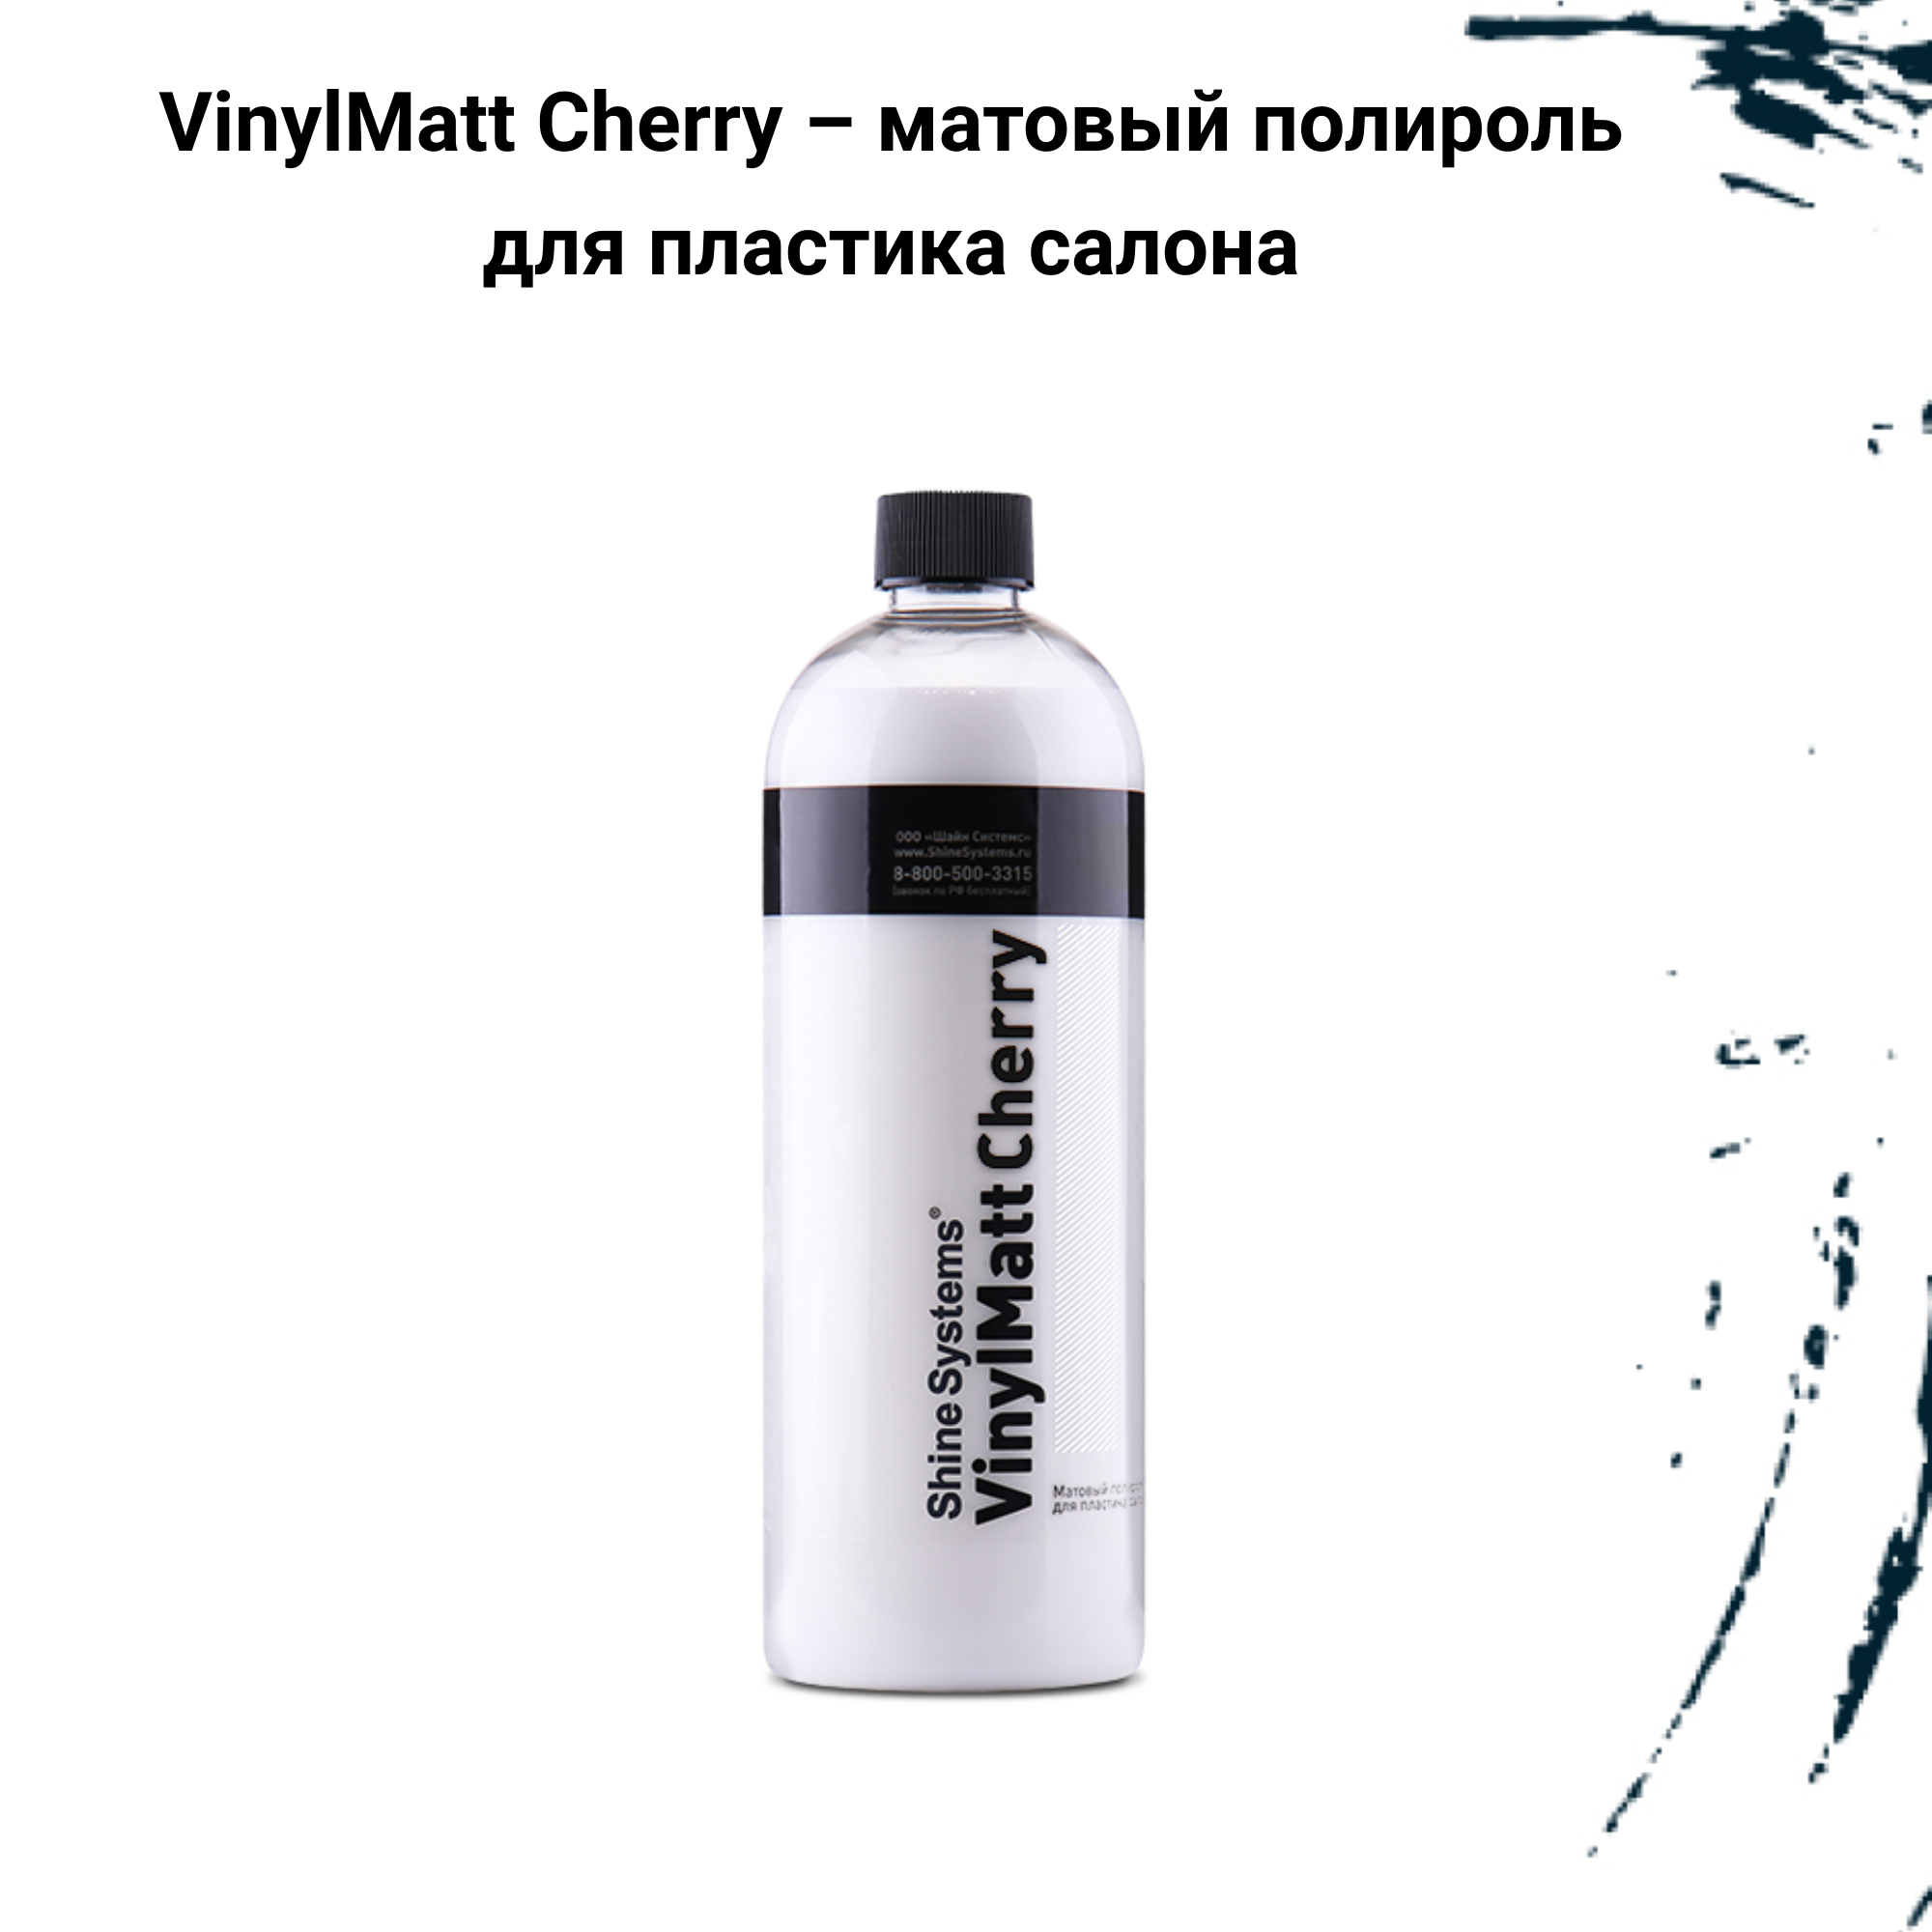 Shine Systems Полироль для пластика для салона автомобиля VinylMatt Cherry, 0.75 л, 0.8 кг, вишня, бесцветный